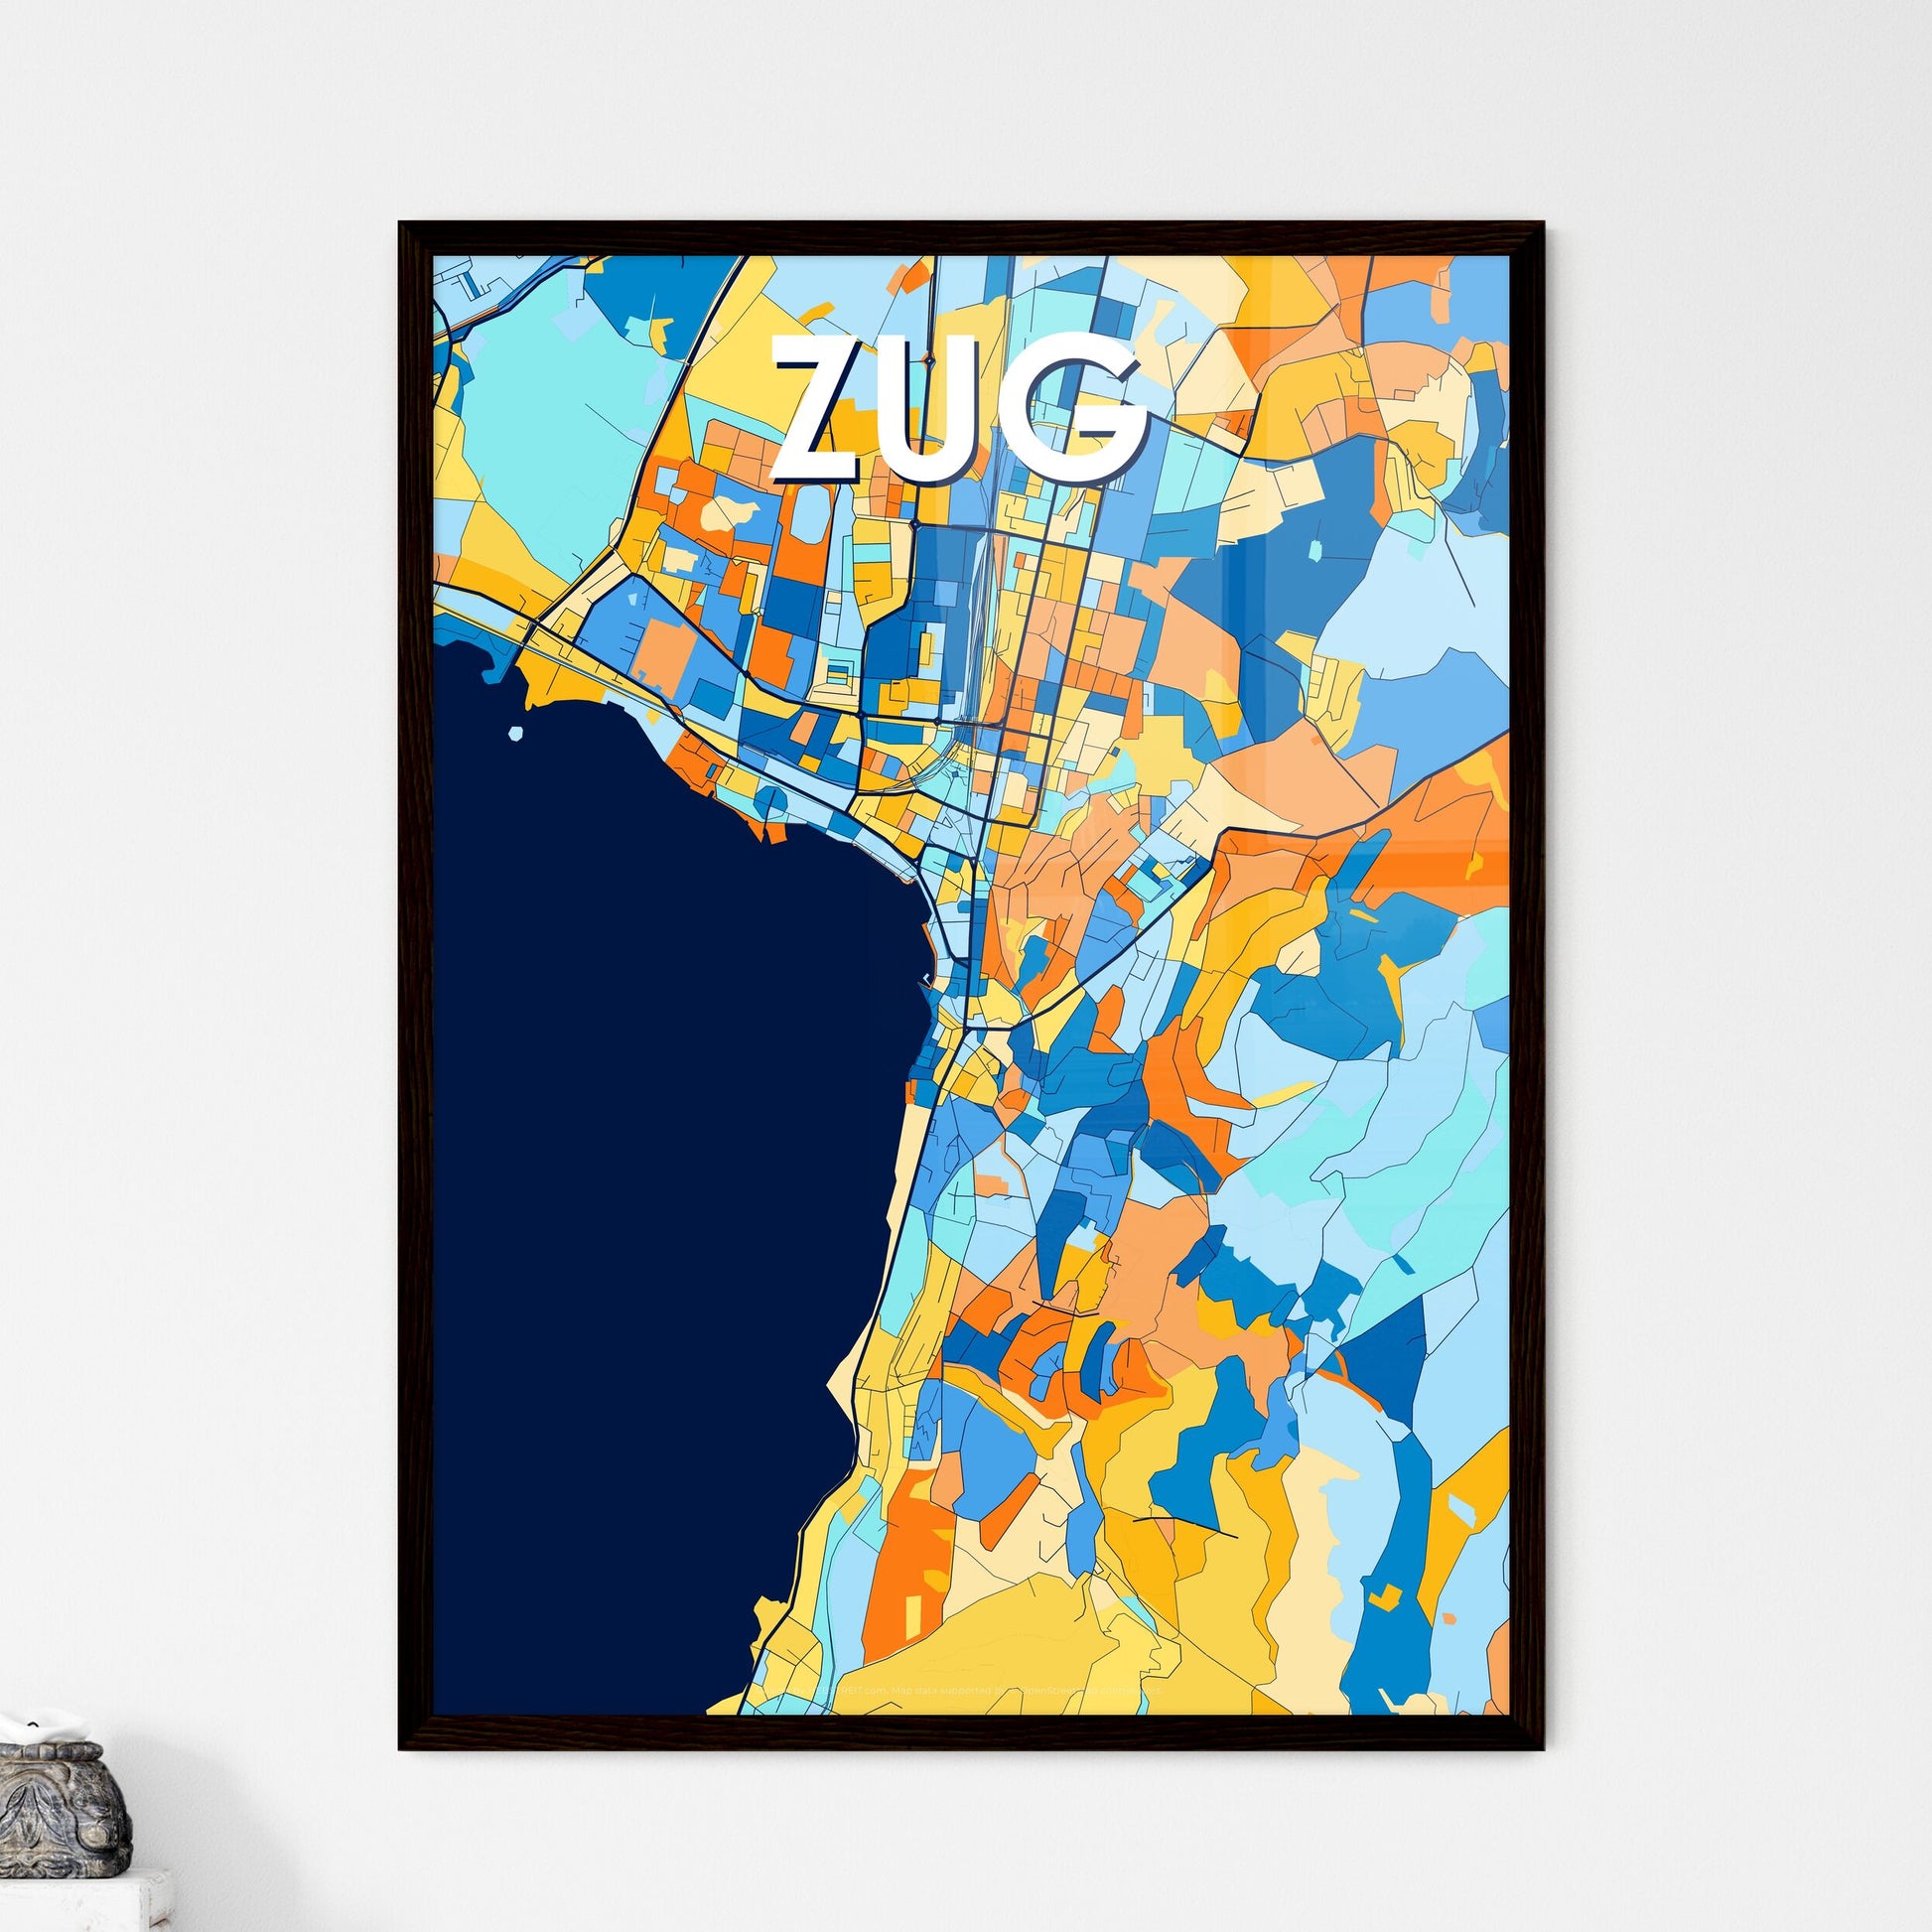 ZUG SWITZERLAND Vibrant Colorful Art Map Poster Blue Orange